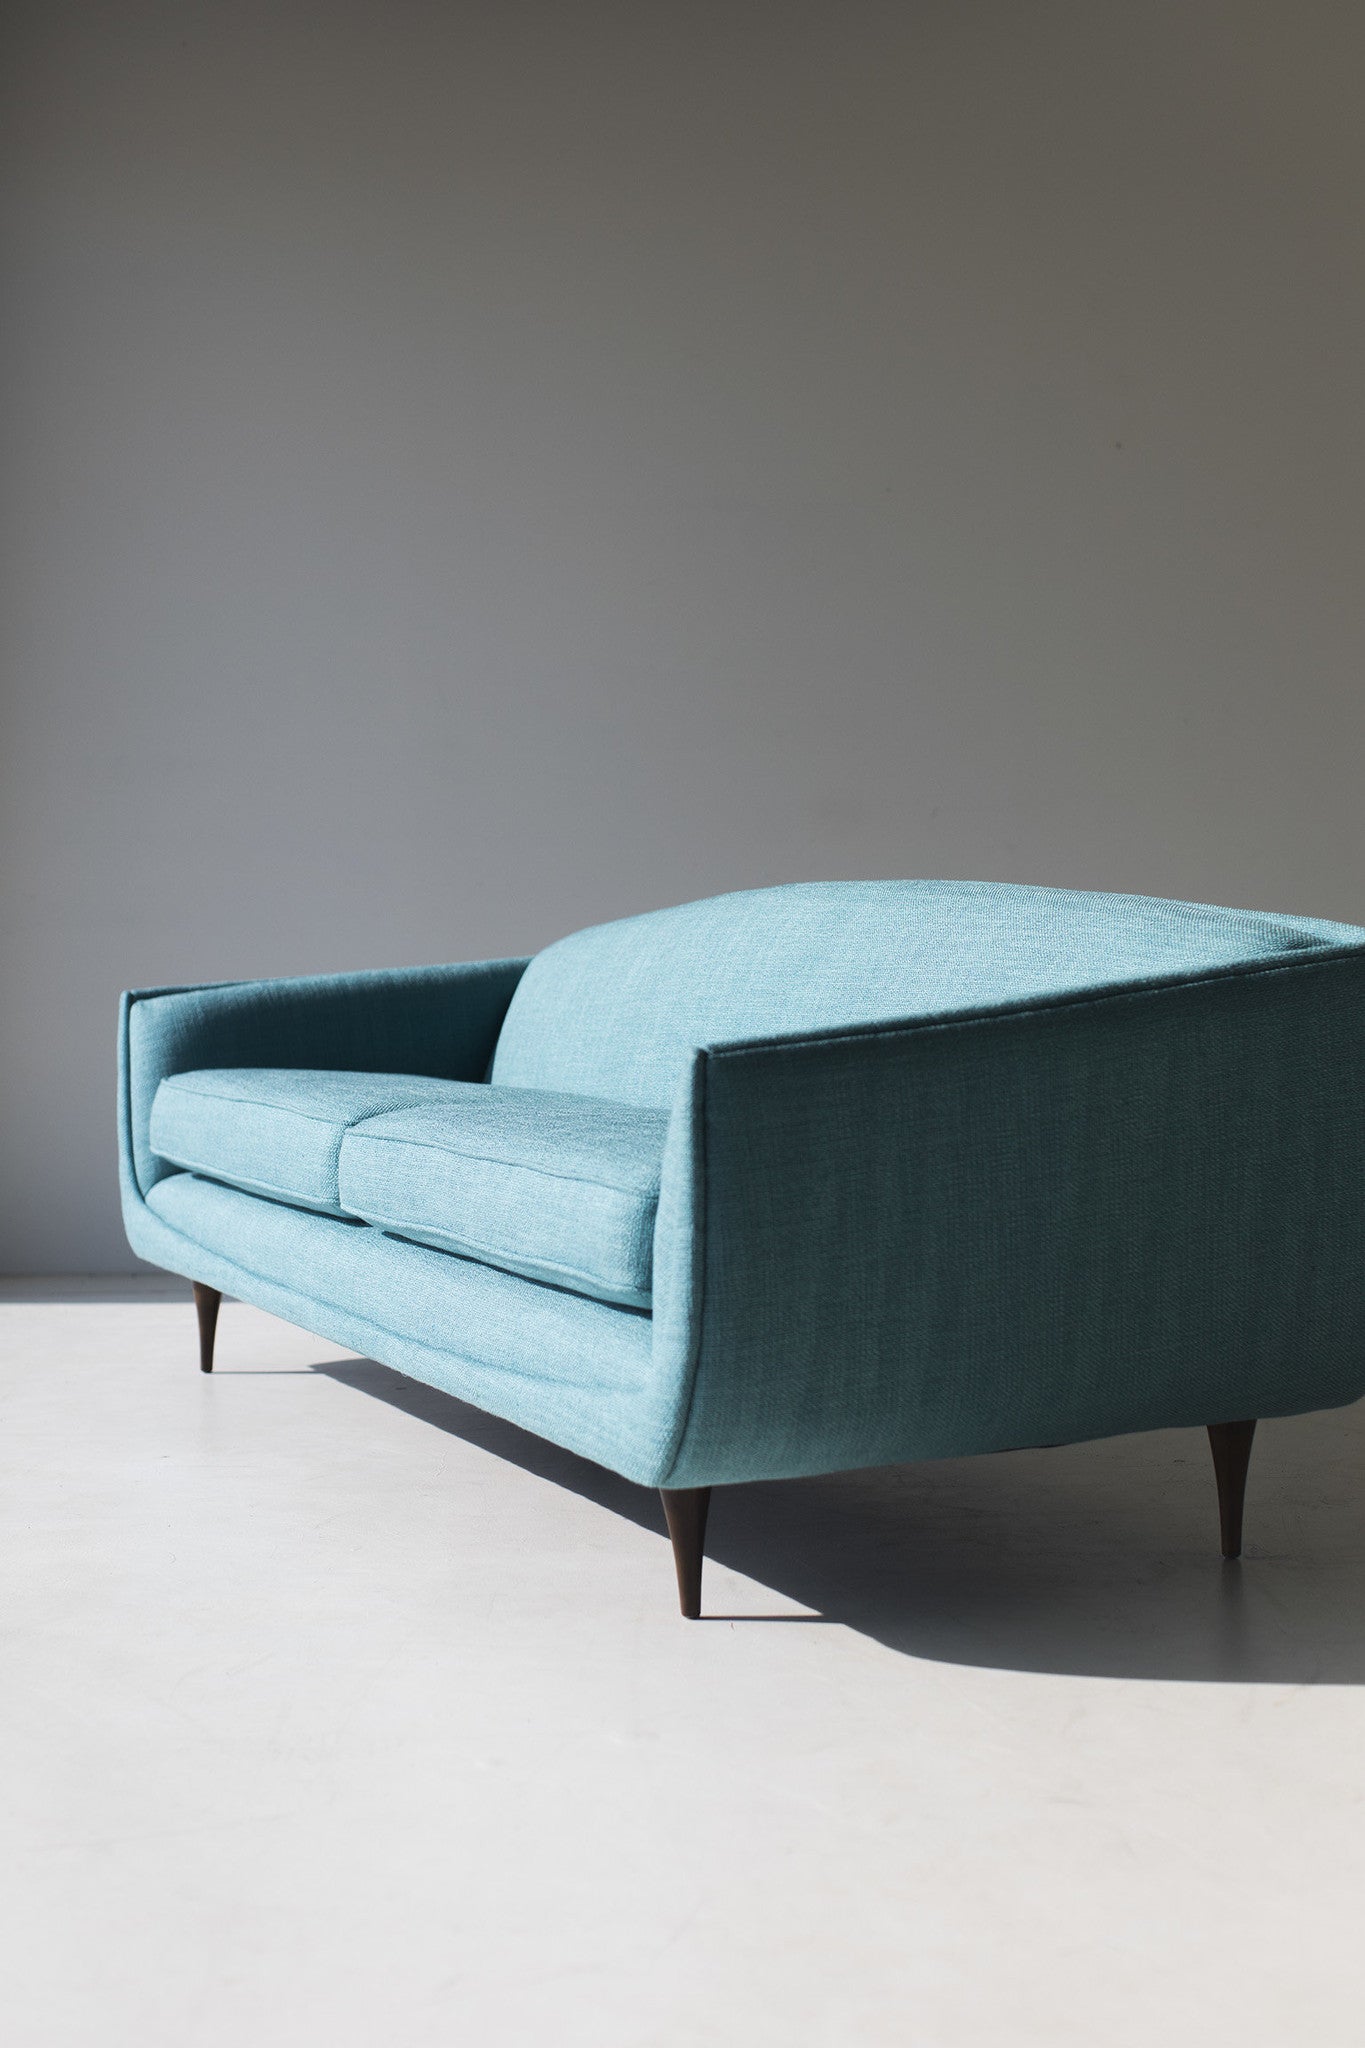 Selig Sofa Designer Attributed to William Hinn - 02061702